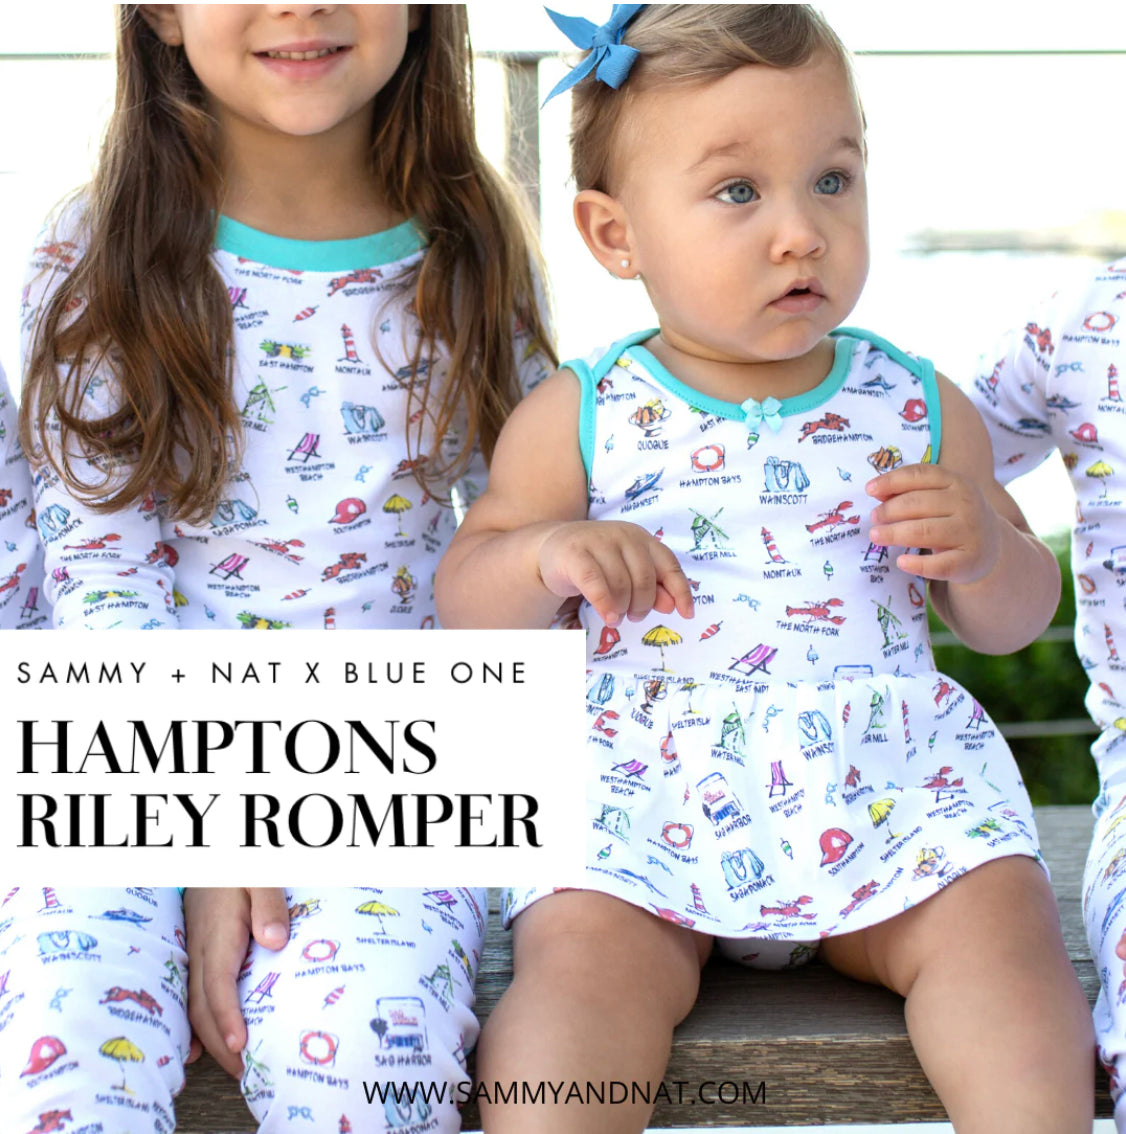 Sammy + Nat Hamptons Riley Romper